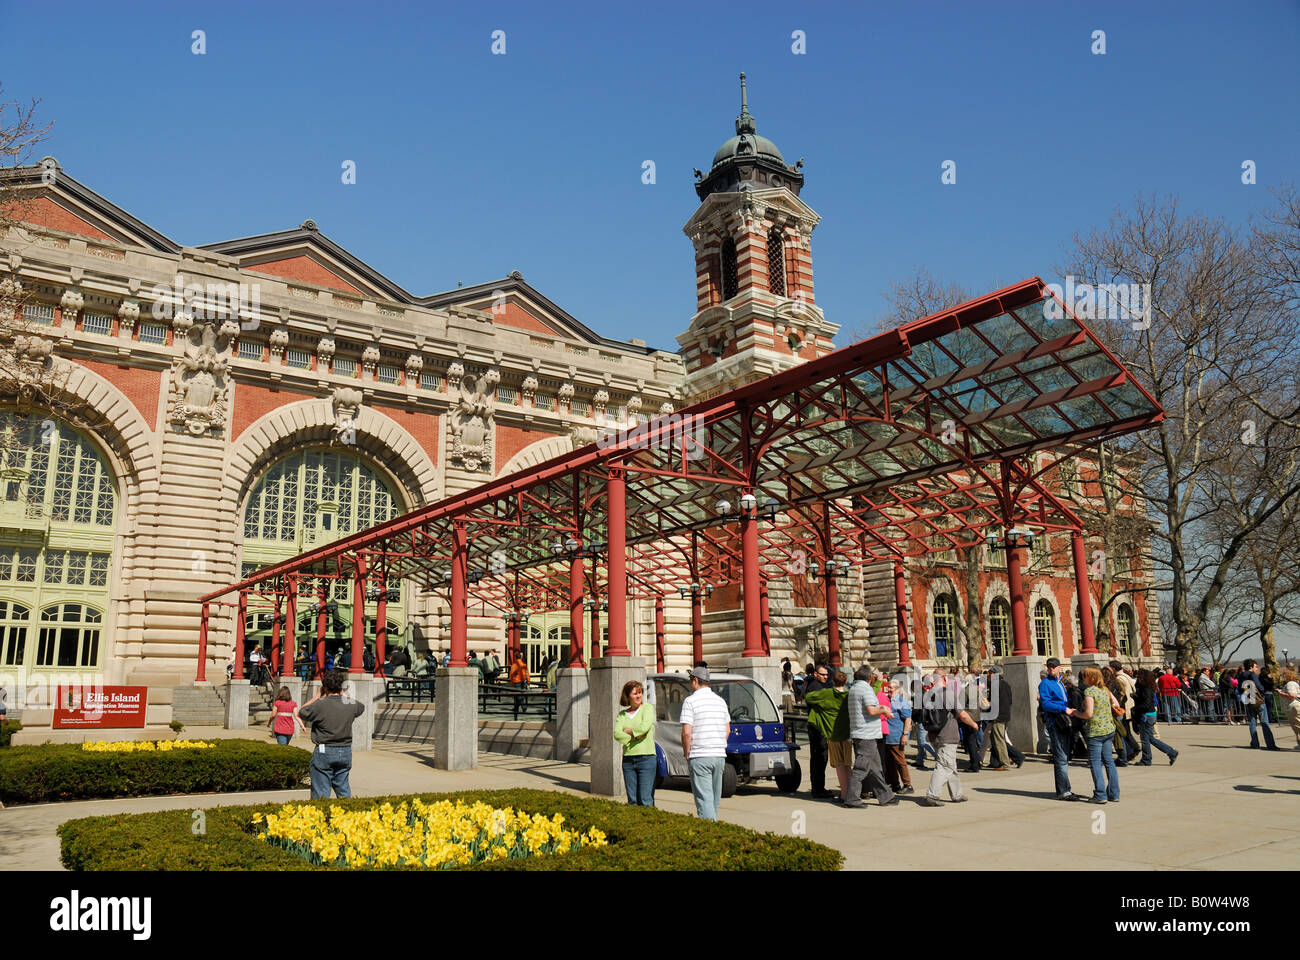 Das Immigration Museum auf Ellis Island, New York Stockfoto